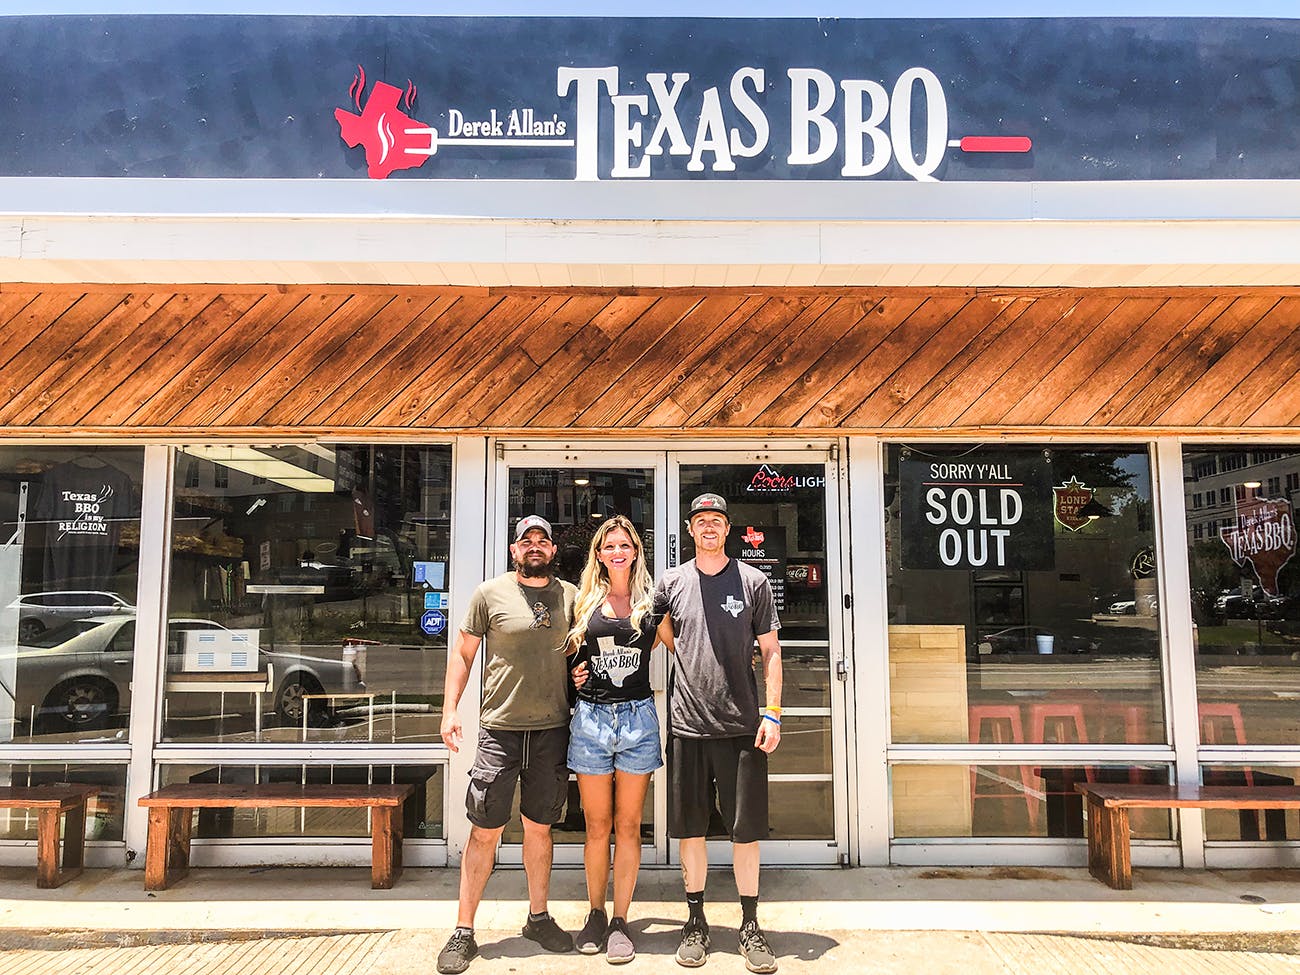 Derek Allan's Texas BBQ restaurant exterior